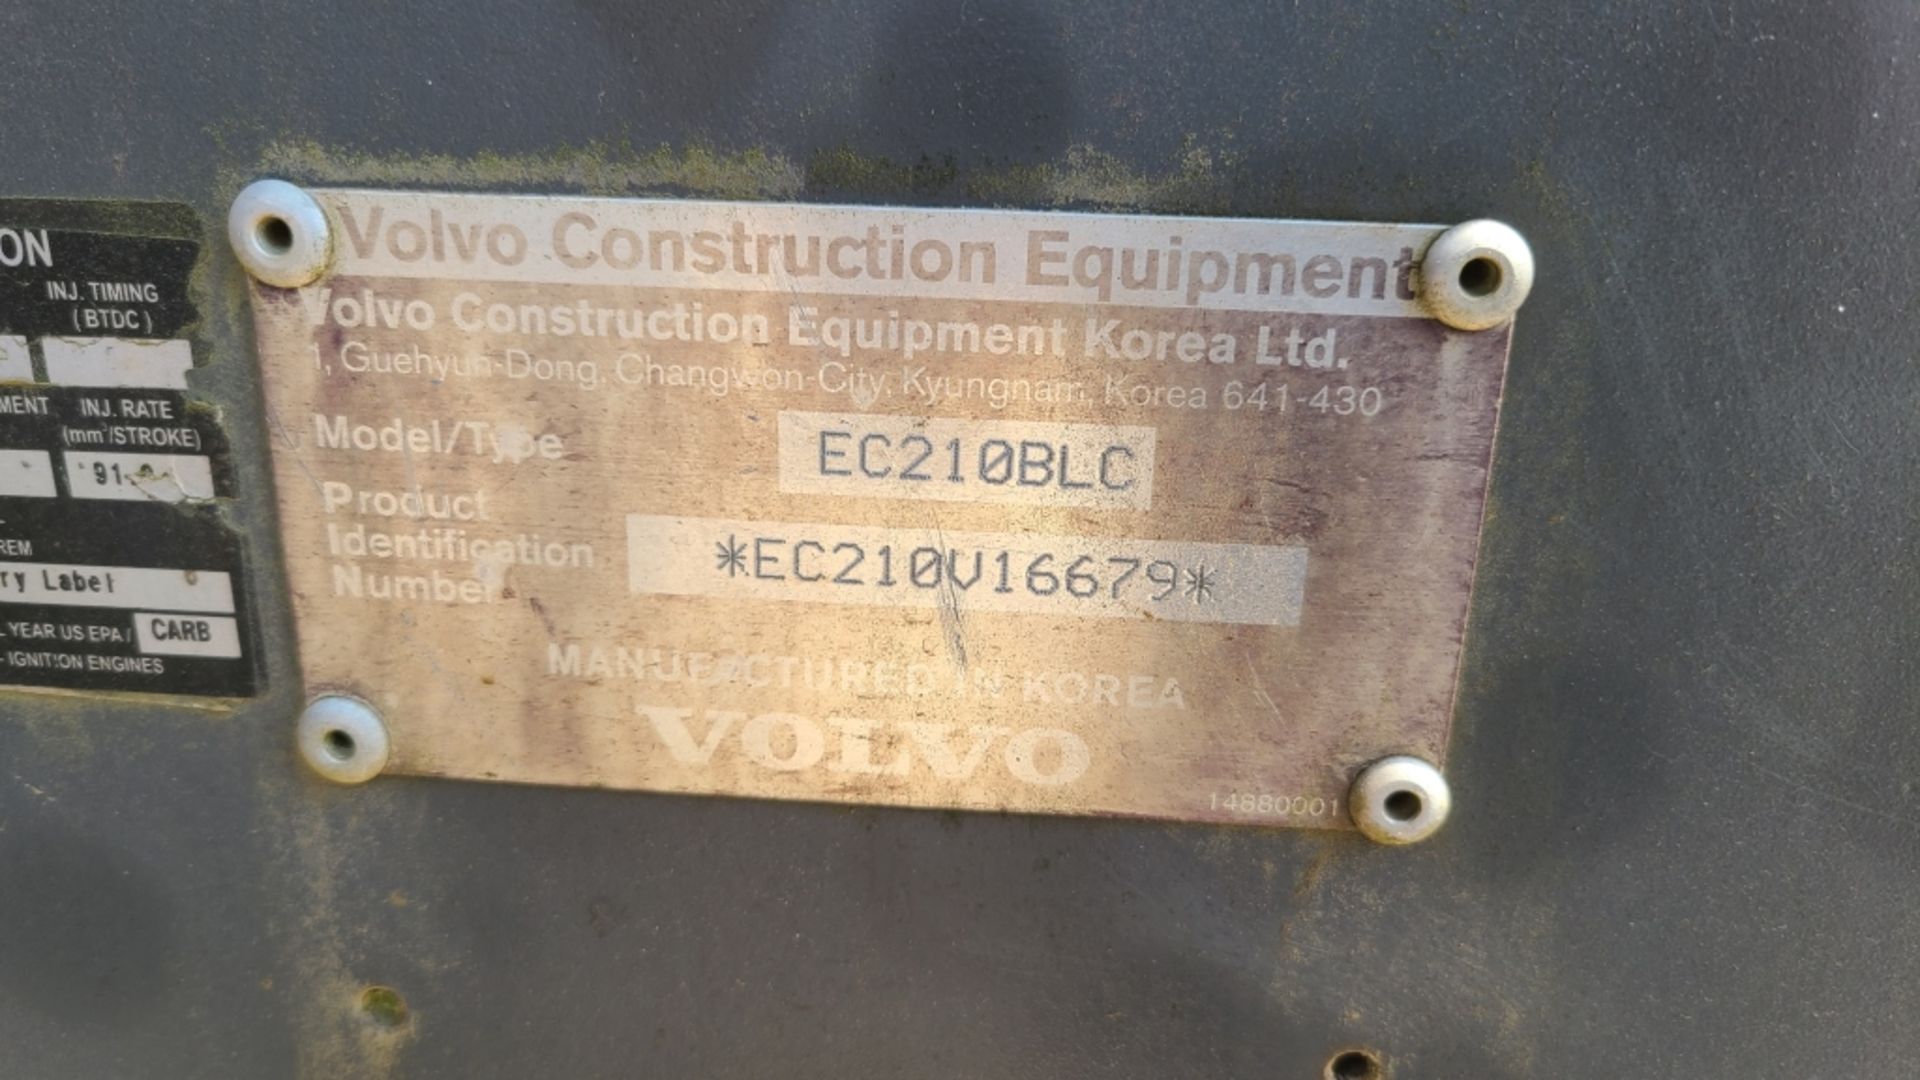 2006 Volvo Ec210blc Excavator - Image 11 of 13